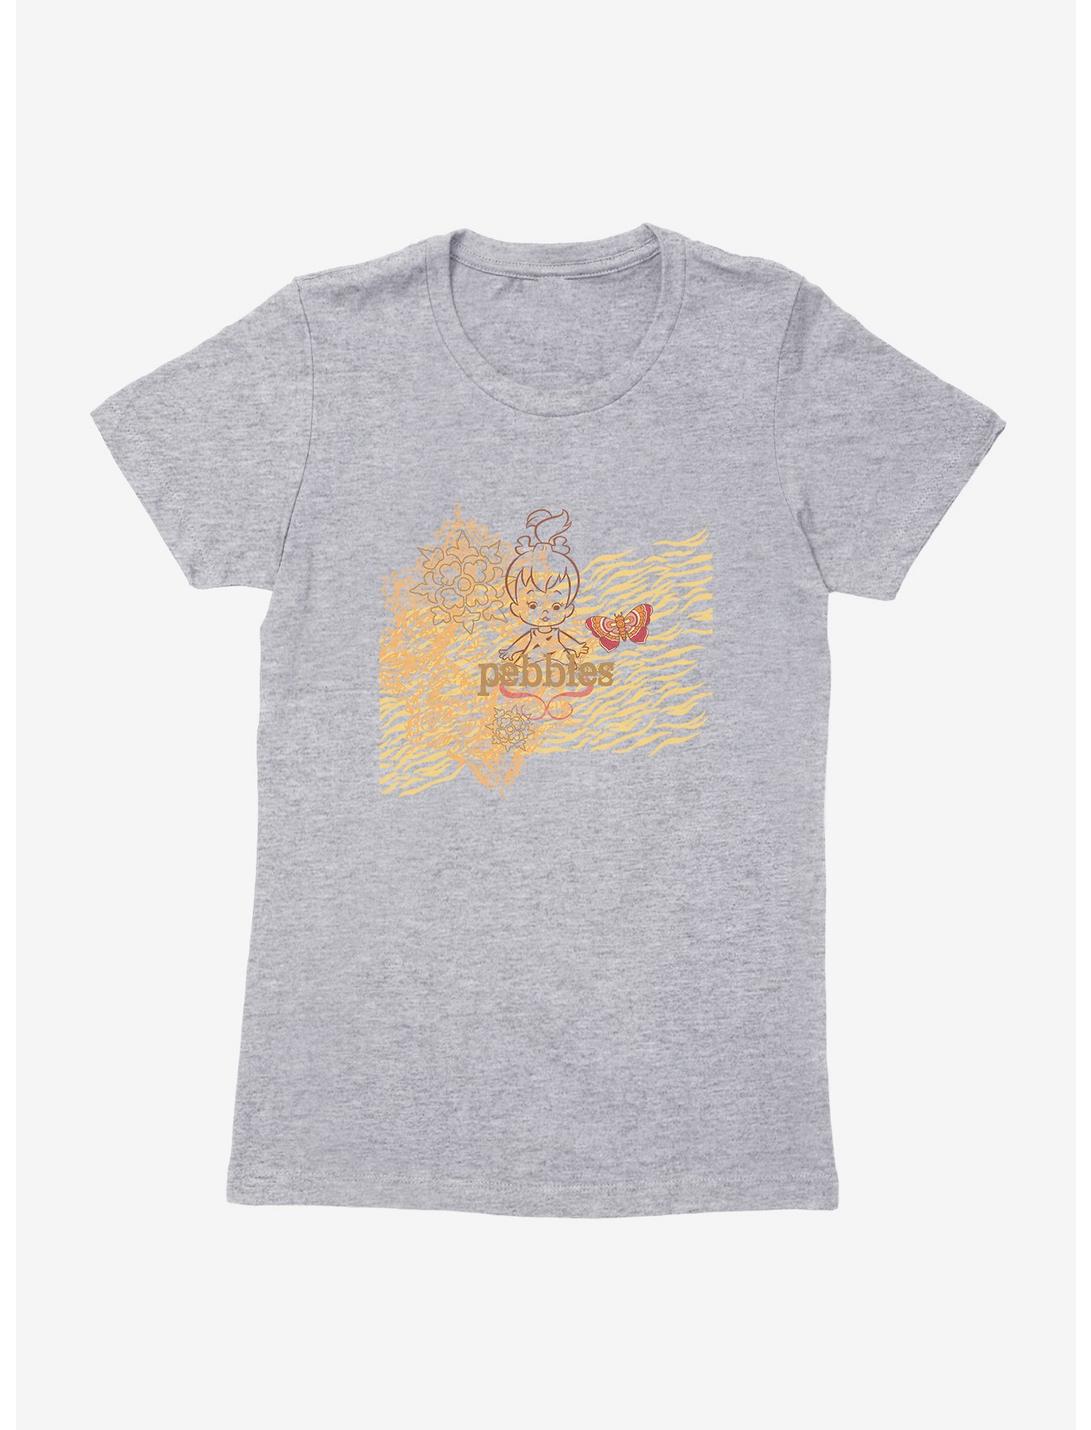 The Flintstones Butterfly Pebbles Womens T-Shirt, HEATHER, hi-res